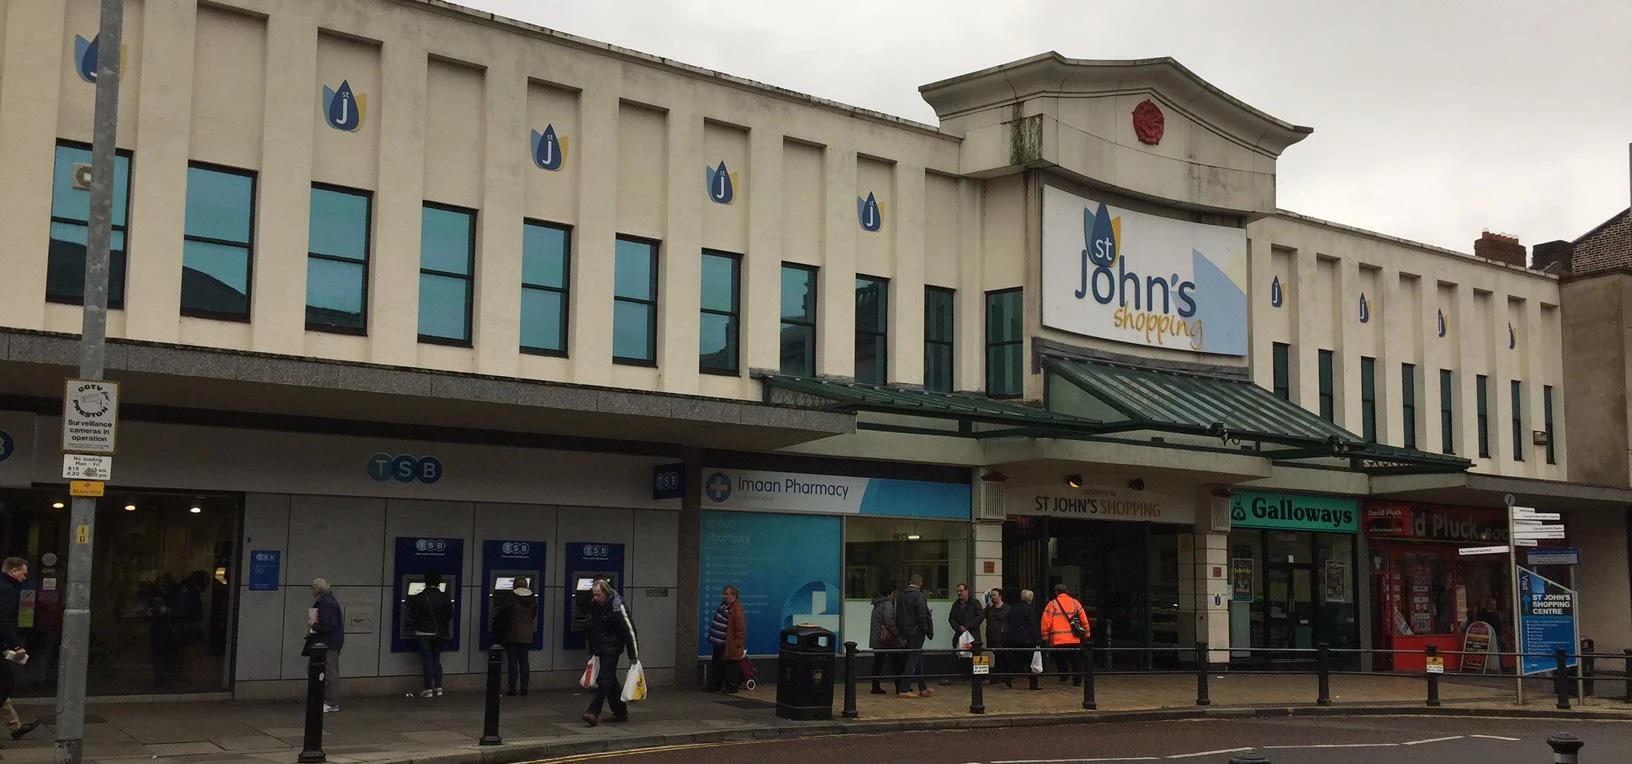 St John's Shopping Centre, Preston 